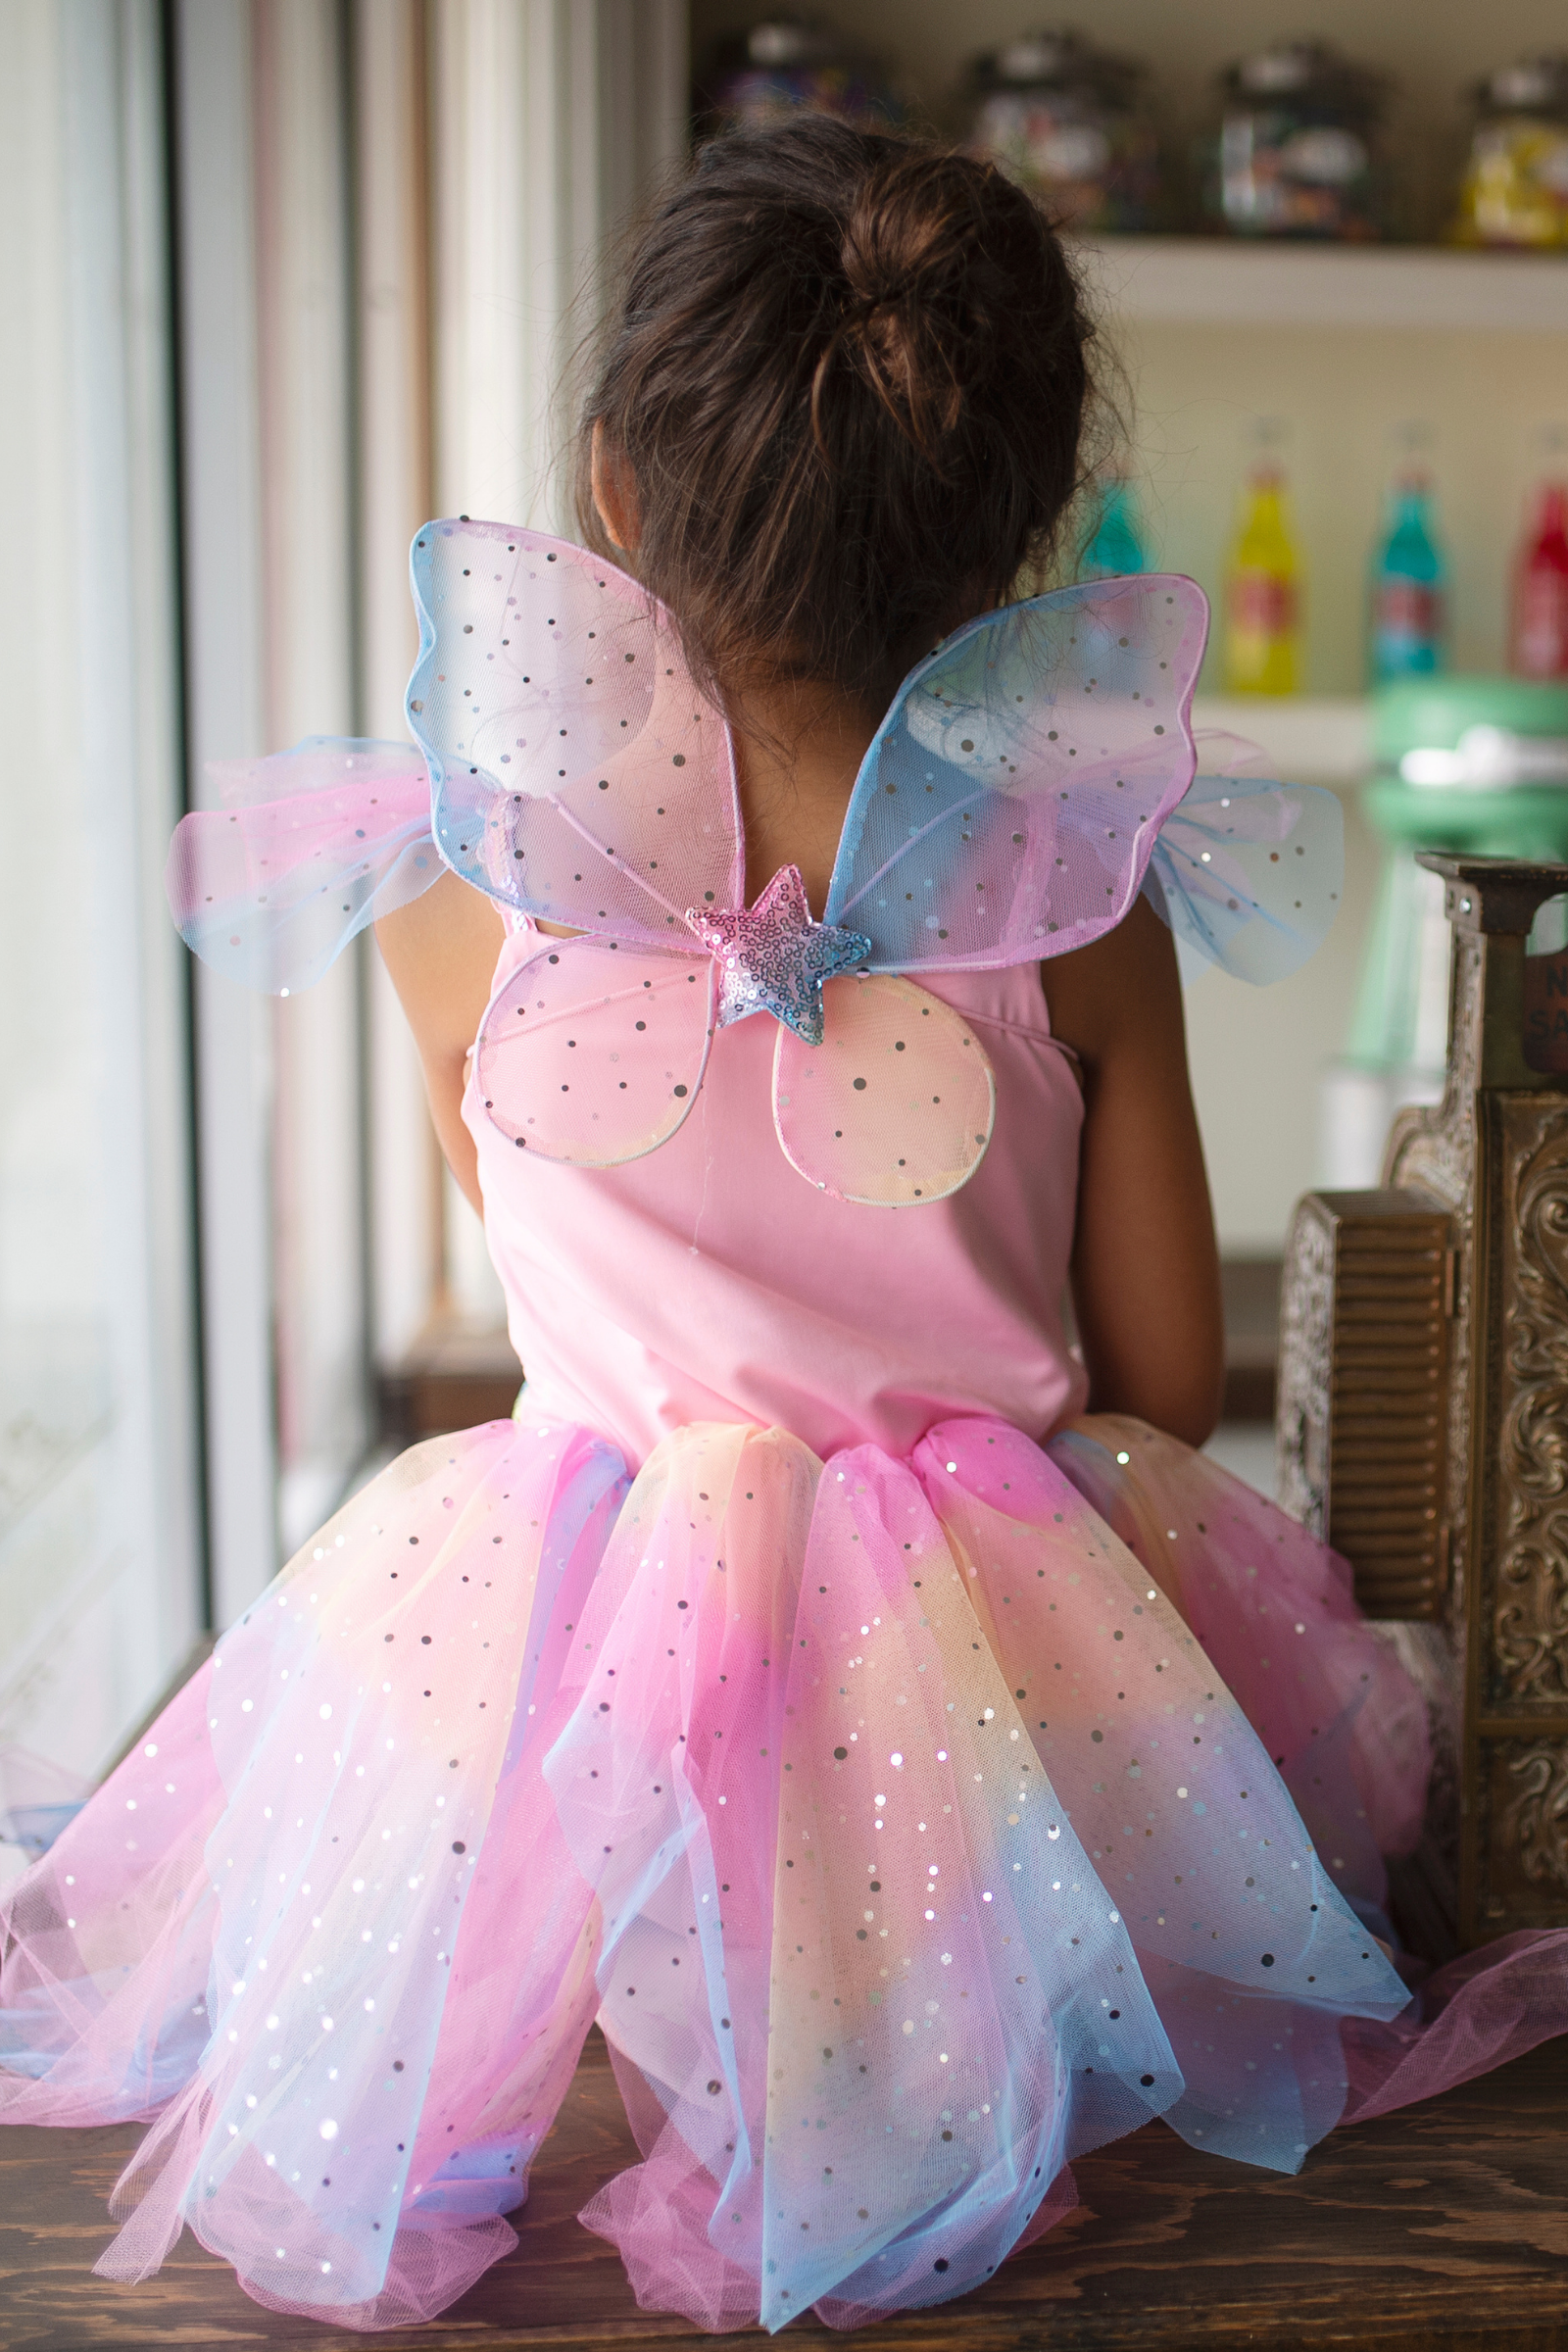 2 Piece Woodland Fairy Costume, Fairyskirt, Fairy Top, Made to